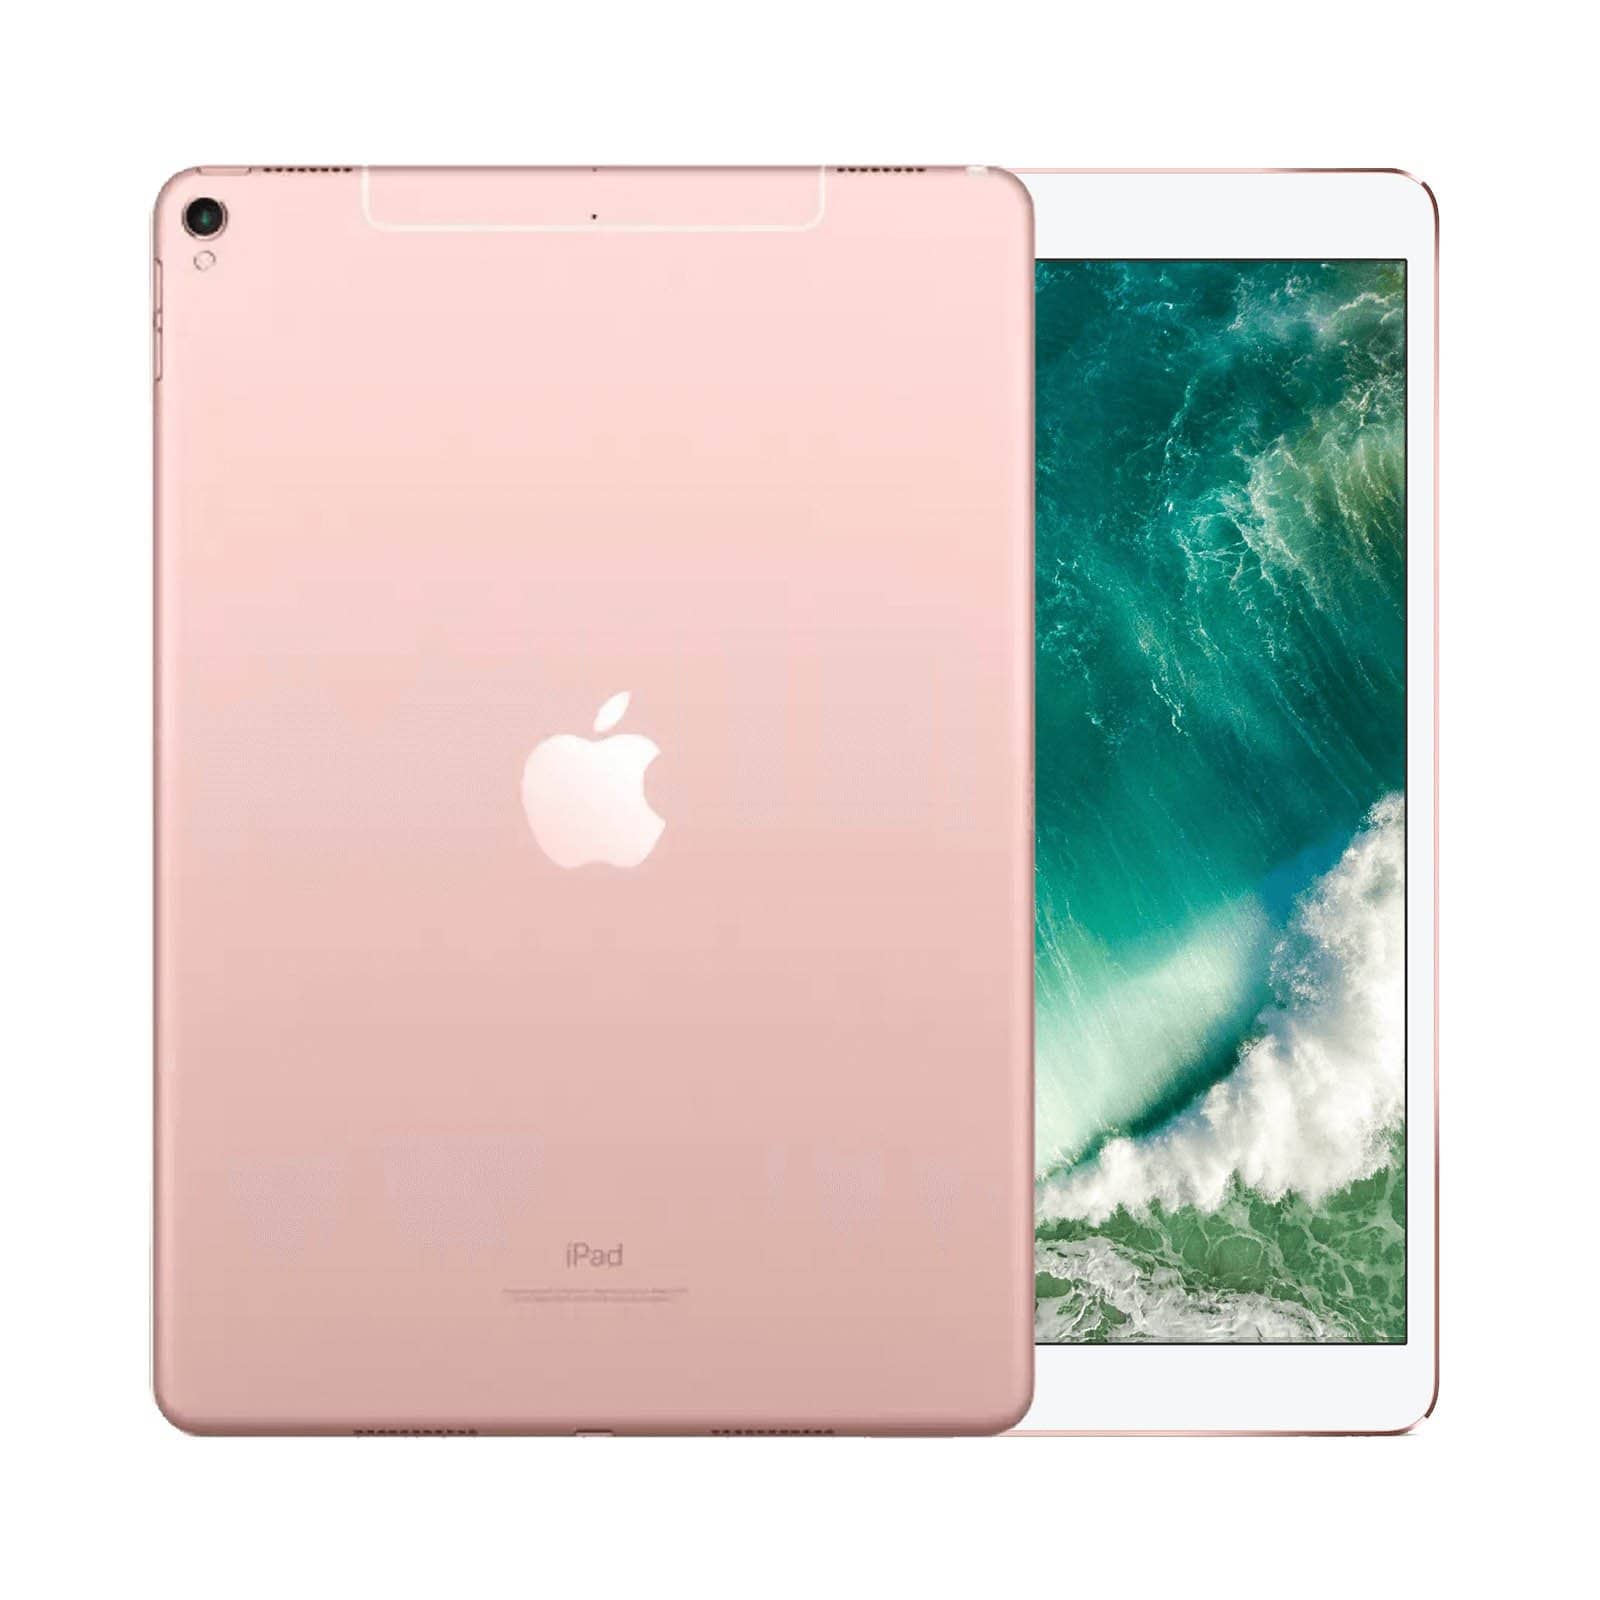 iPad Pro 10.5 Inch 64GB Rose Gold Very Good - Unlocked 64GB Rose Gold Very Good